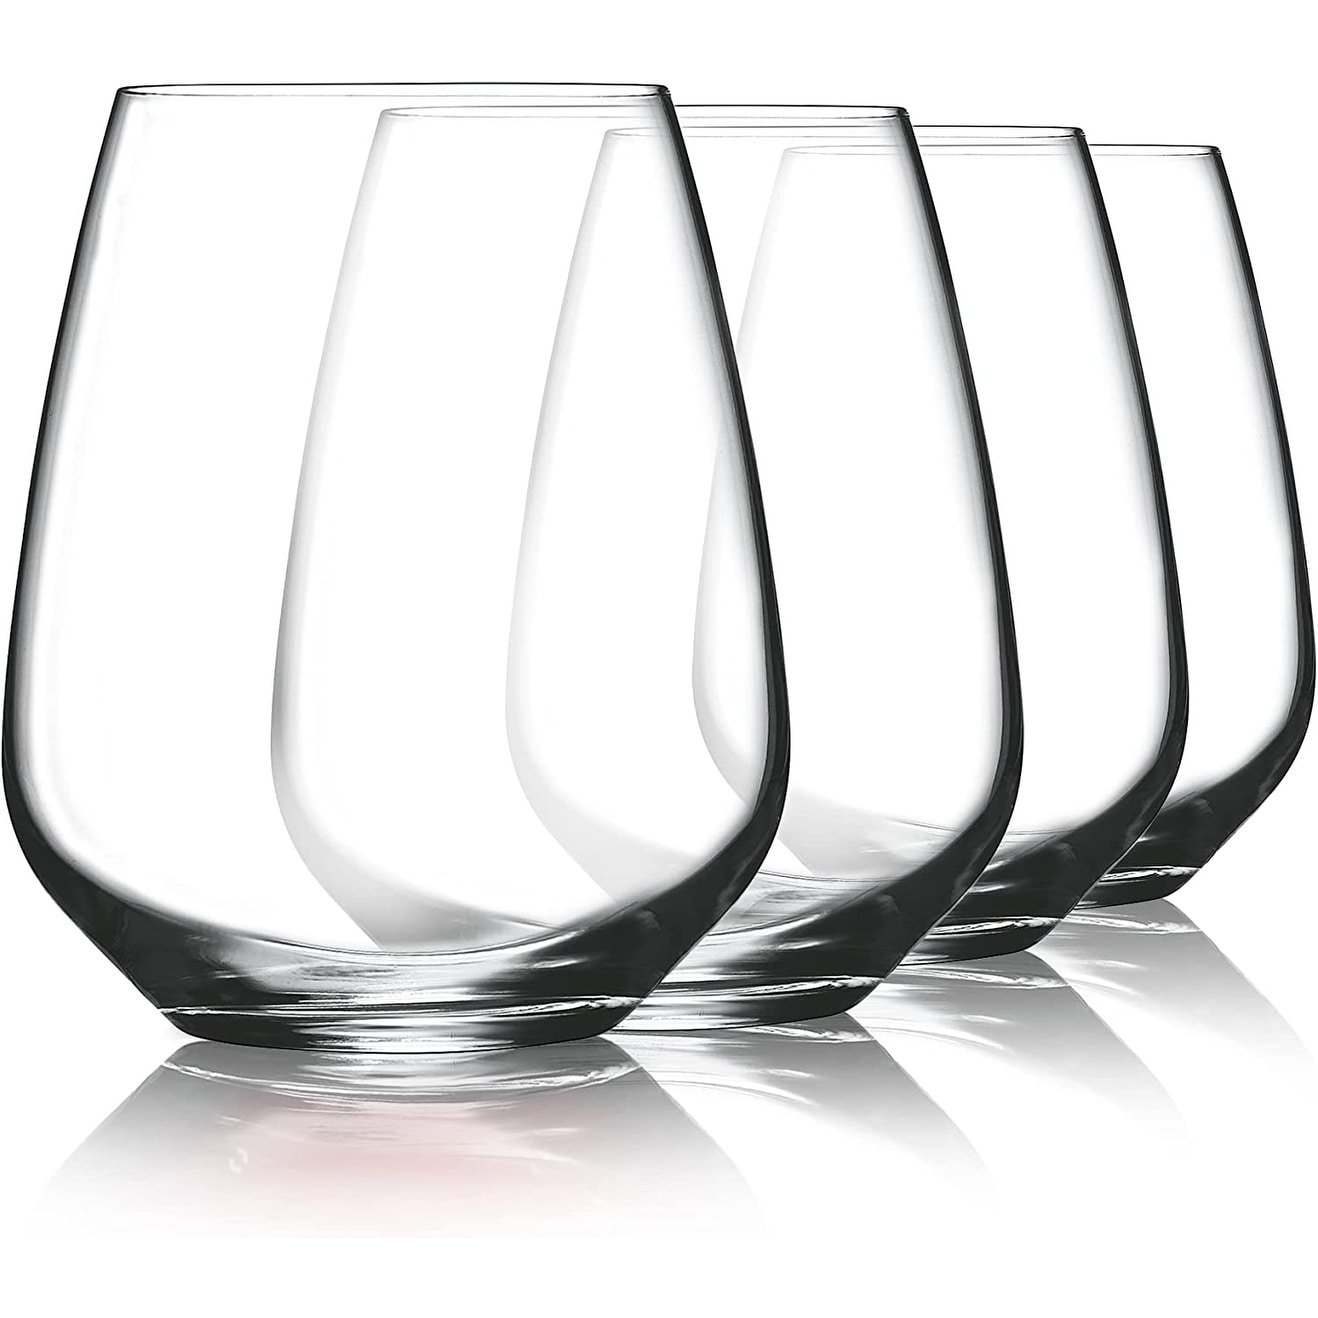 Luigi Bormioli Crescendo 20 oz. Bordeaux Wine Glasses, Set of 4